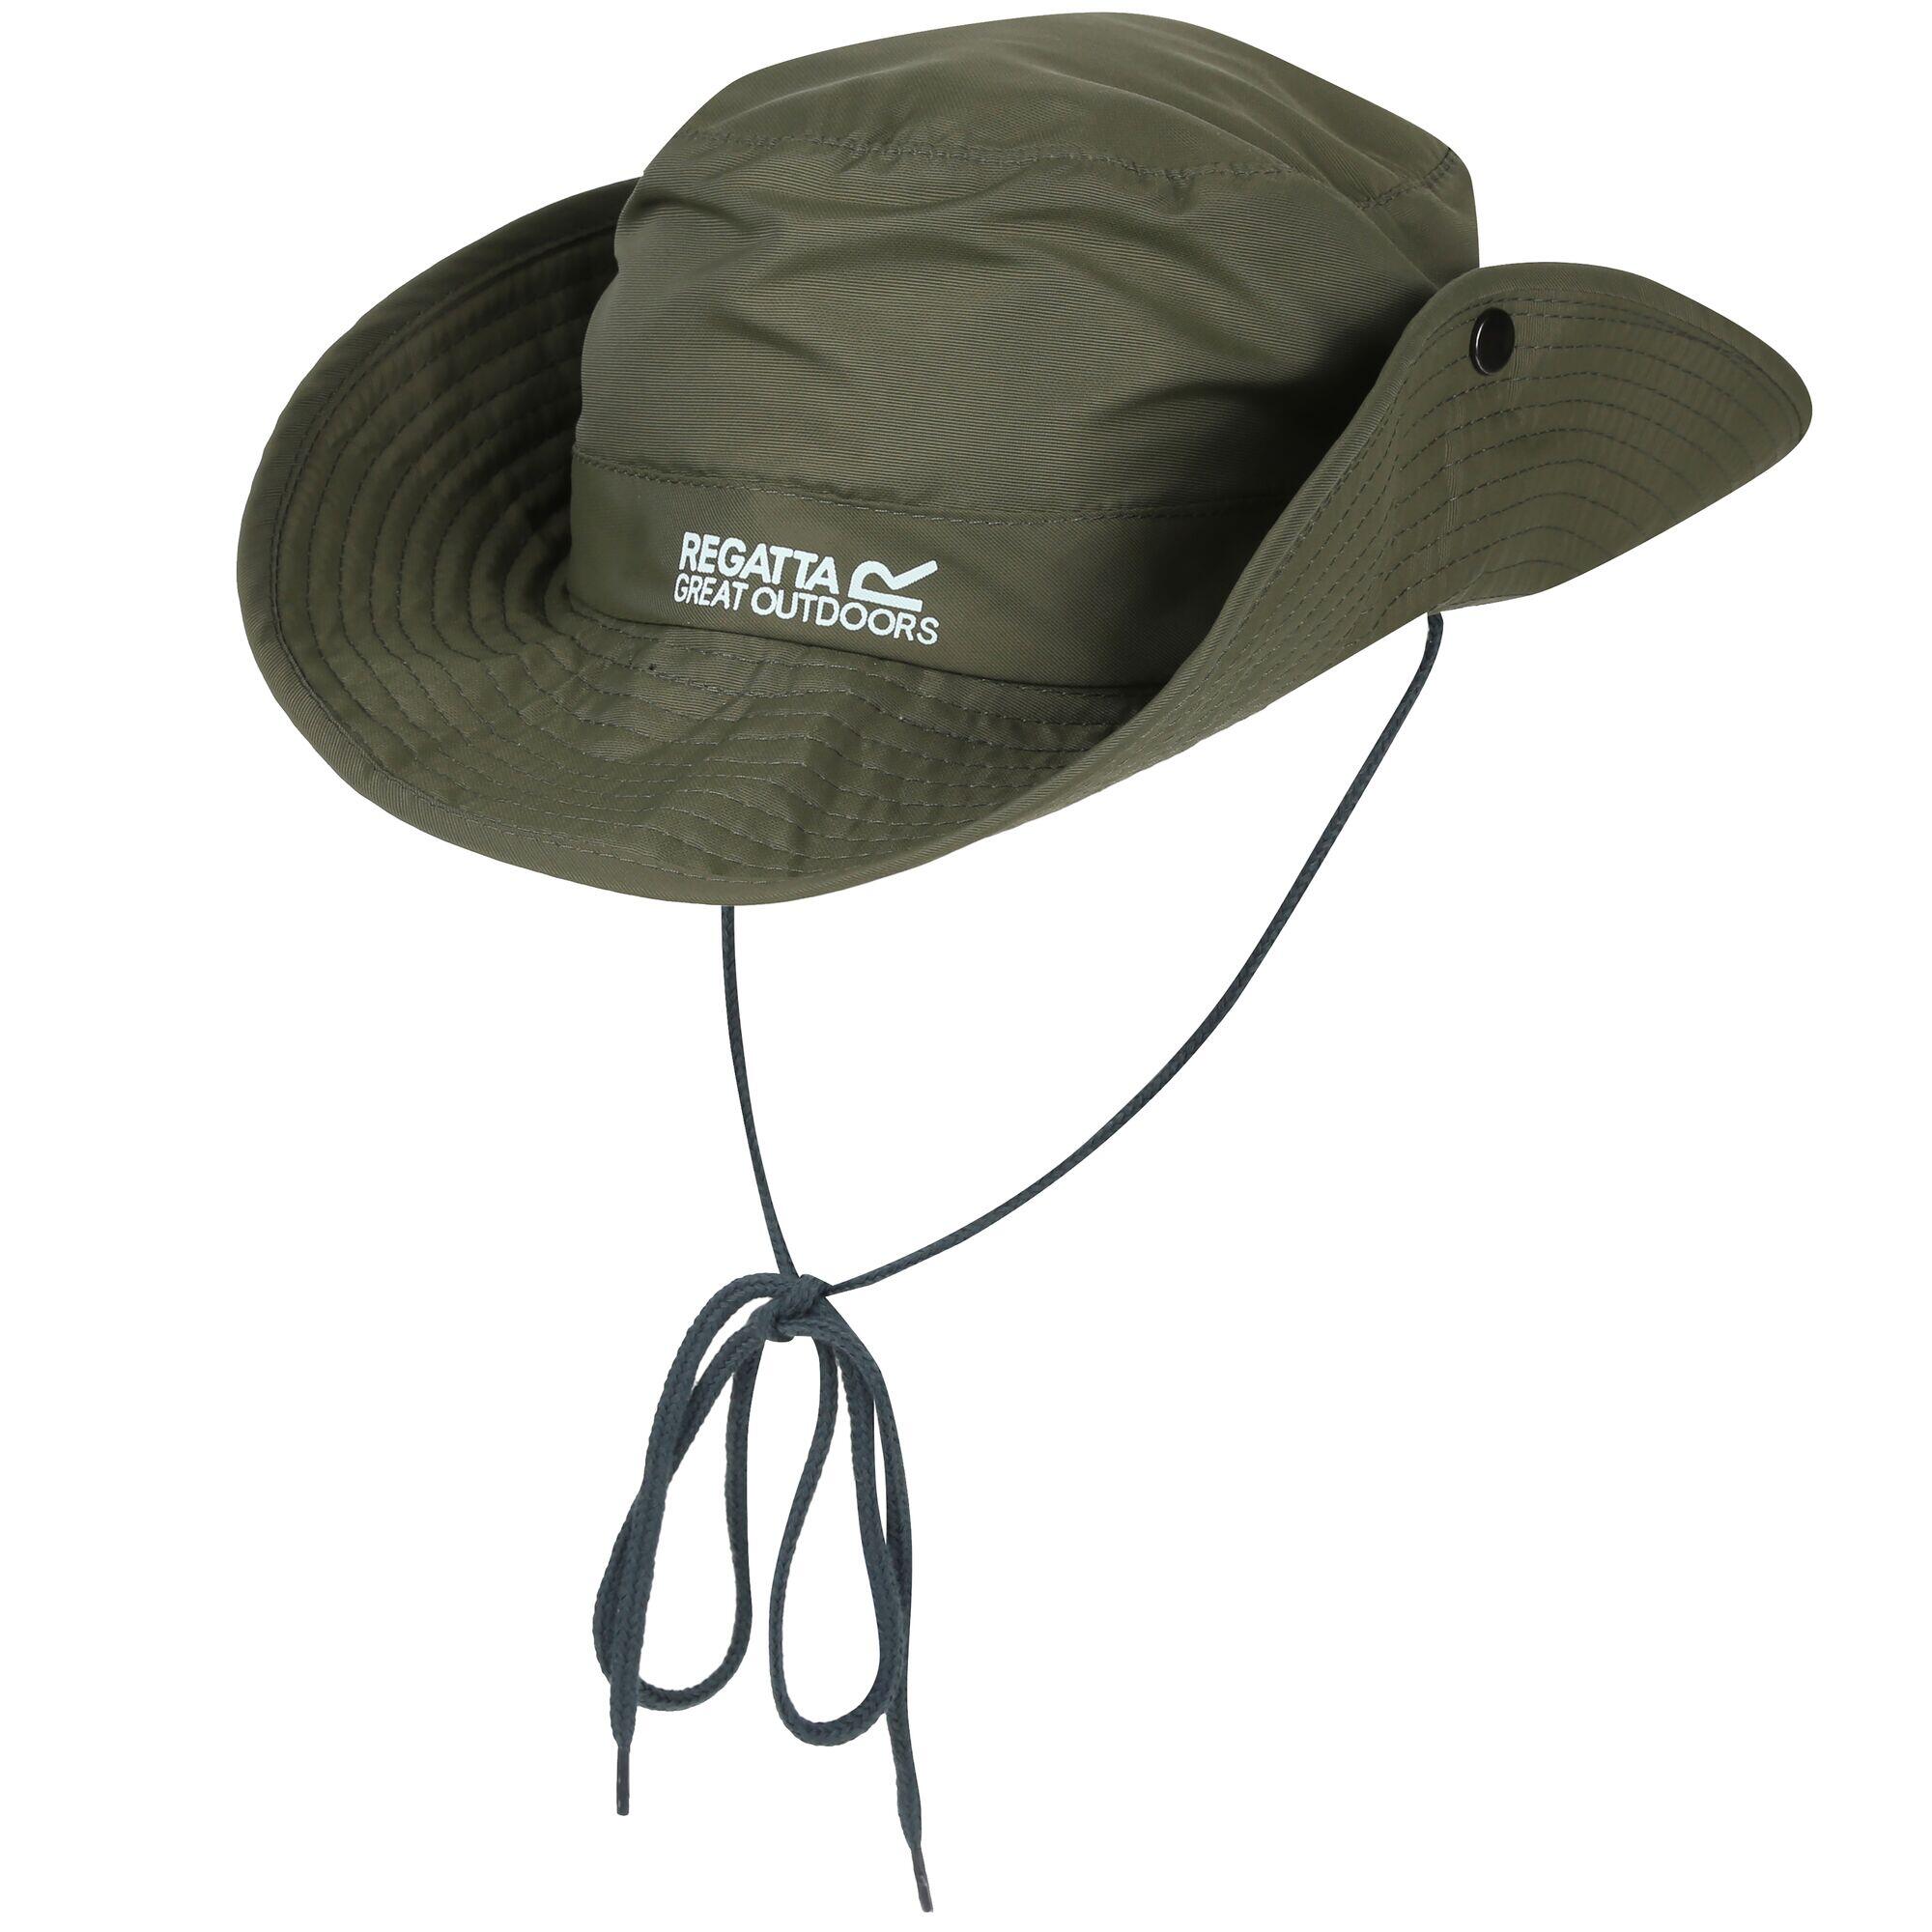 Regatta Great Outdoors Unisex Adventure Tech Summer Hiking Sun Hat